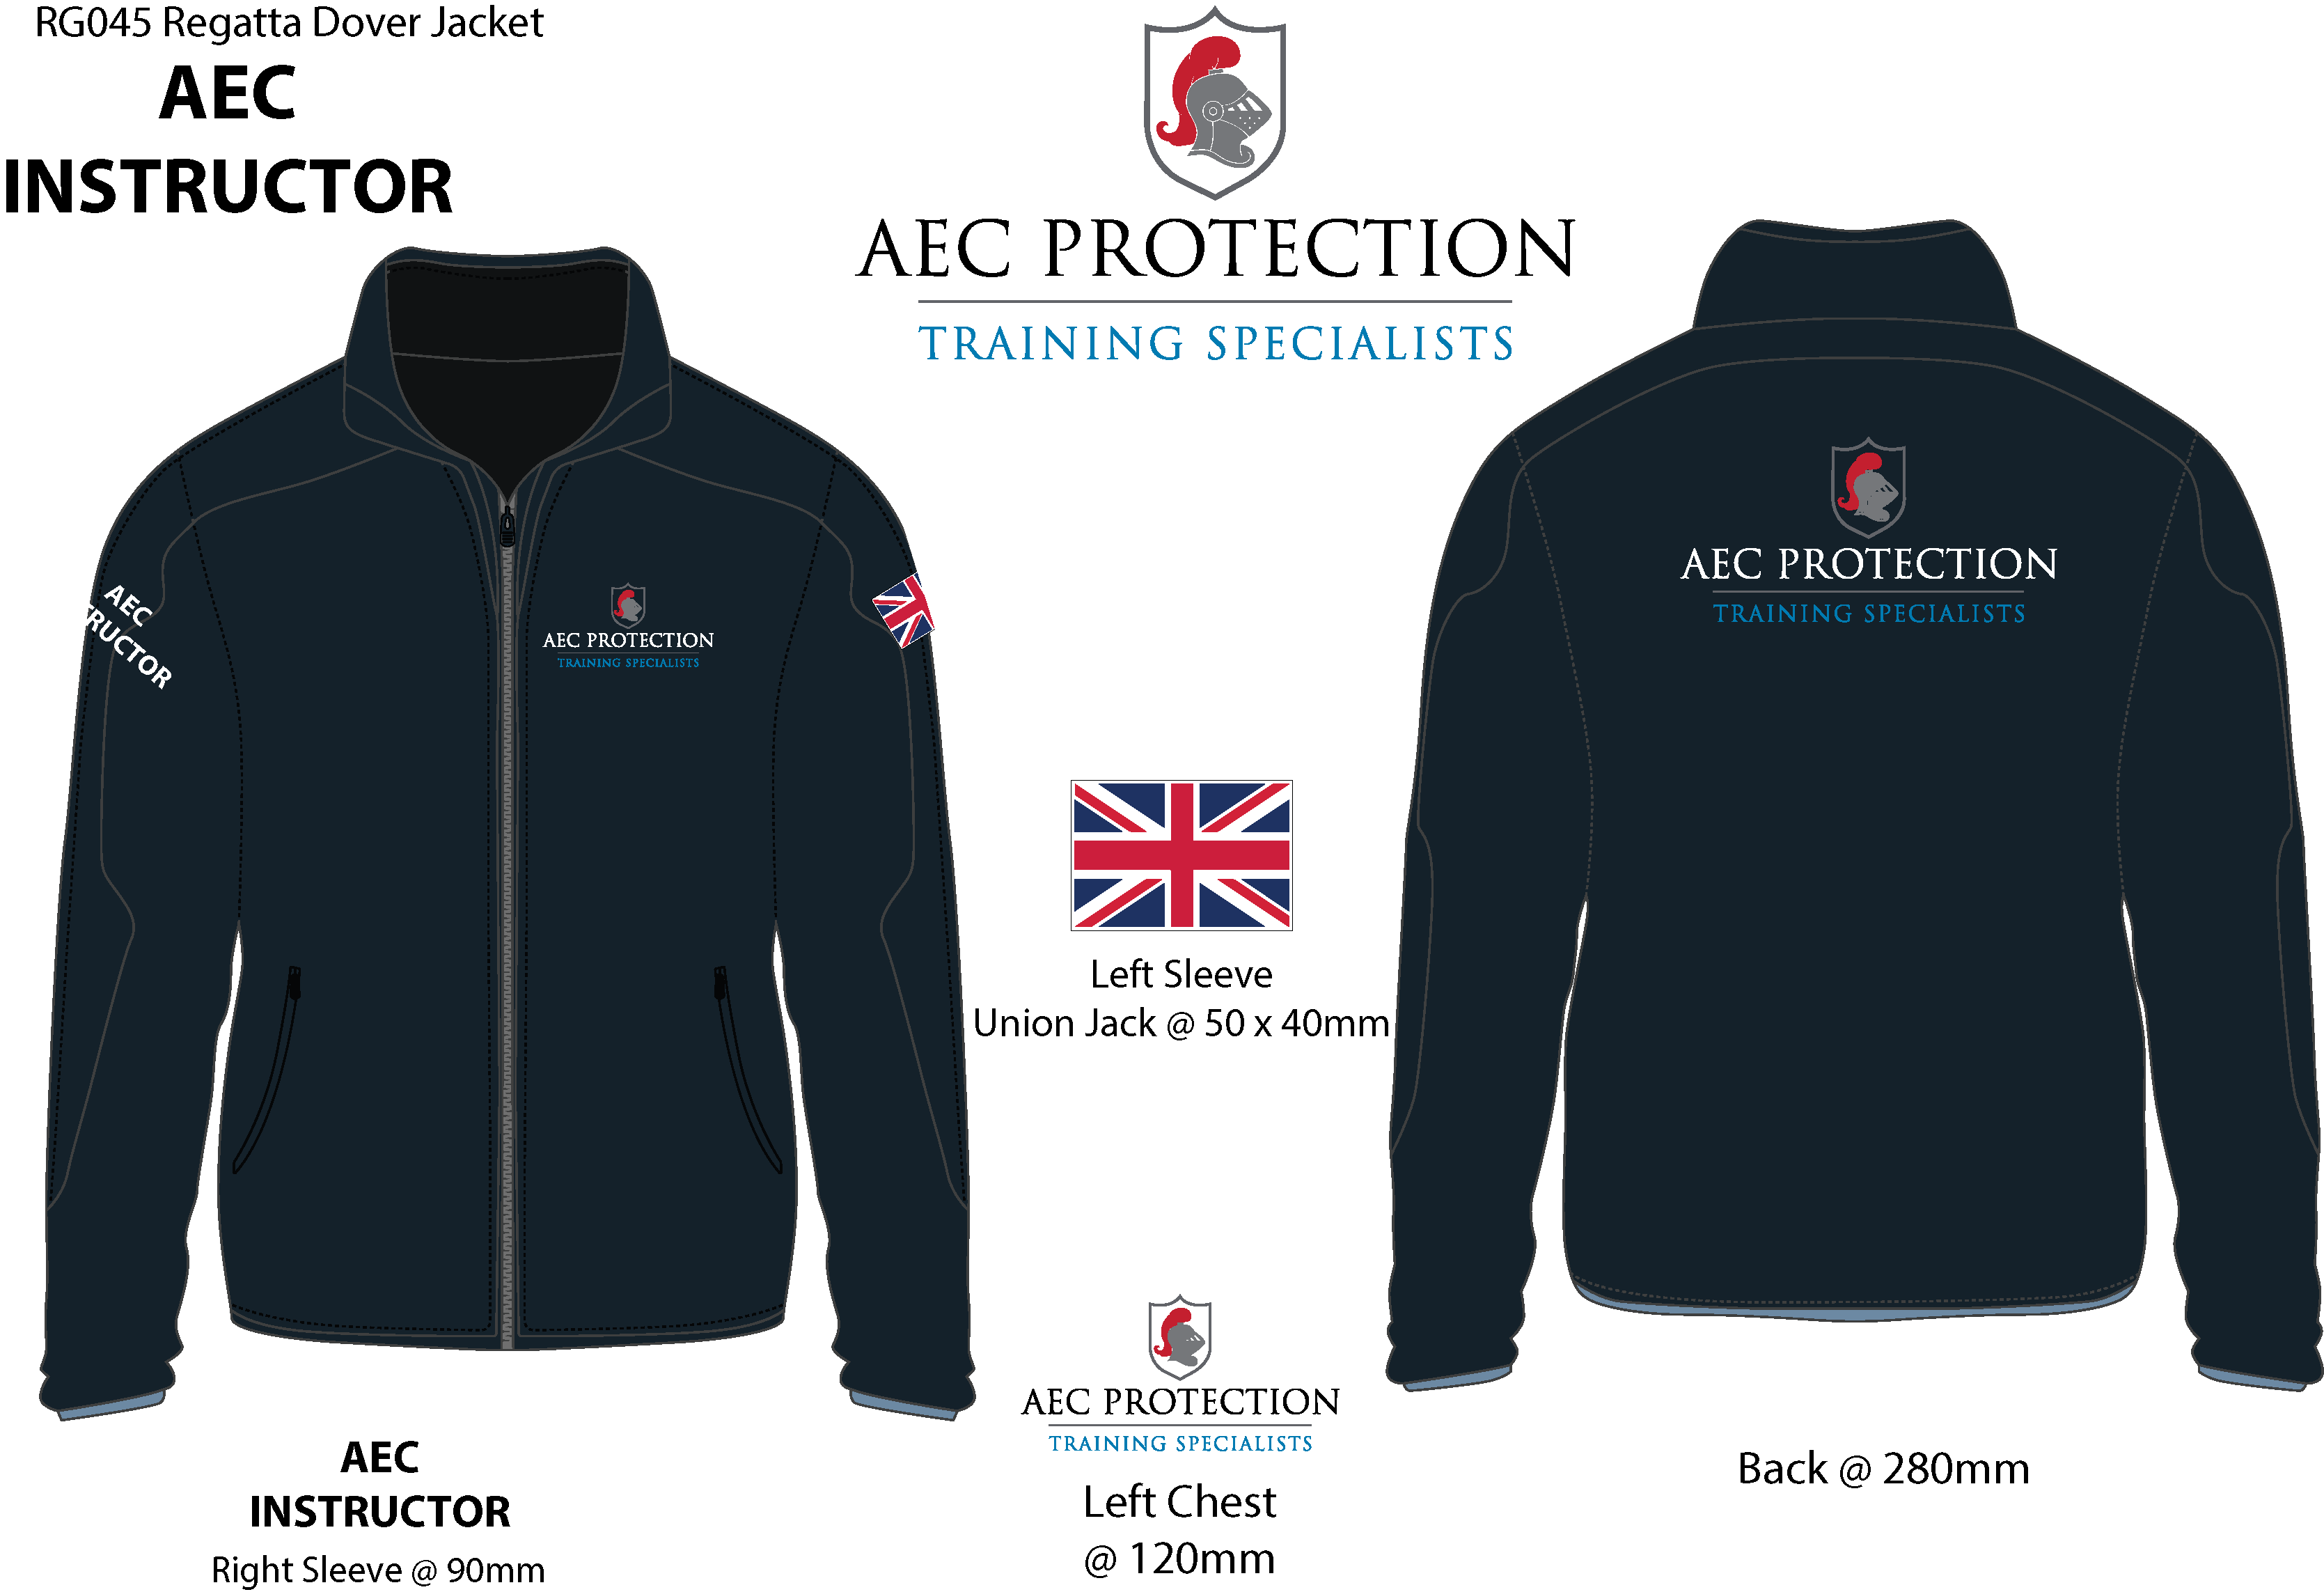 AEC-Training Dover Jacket - AEC INSTRUCTOR